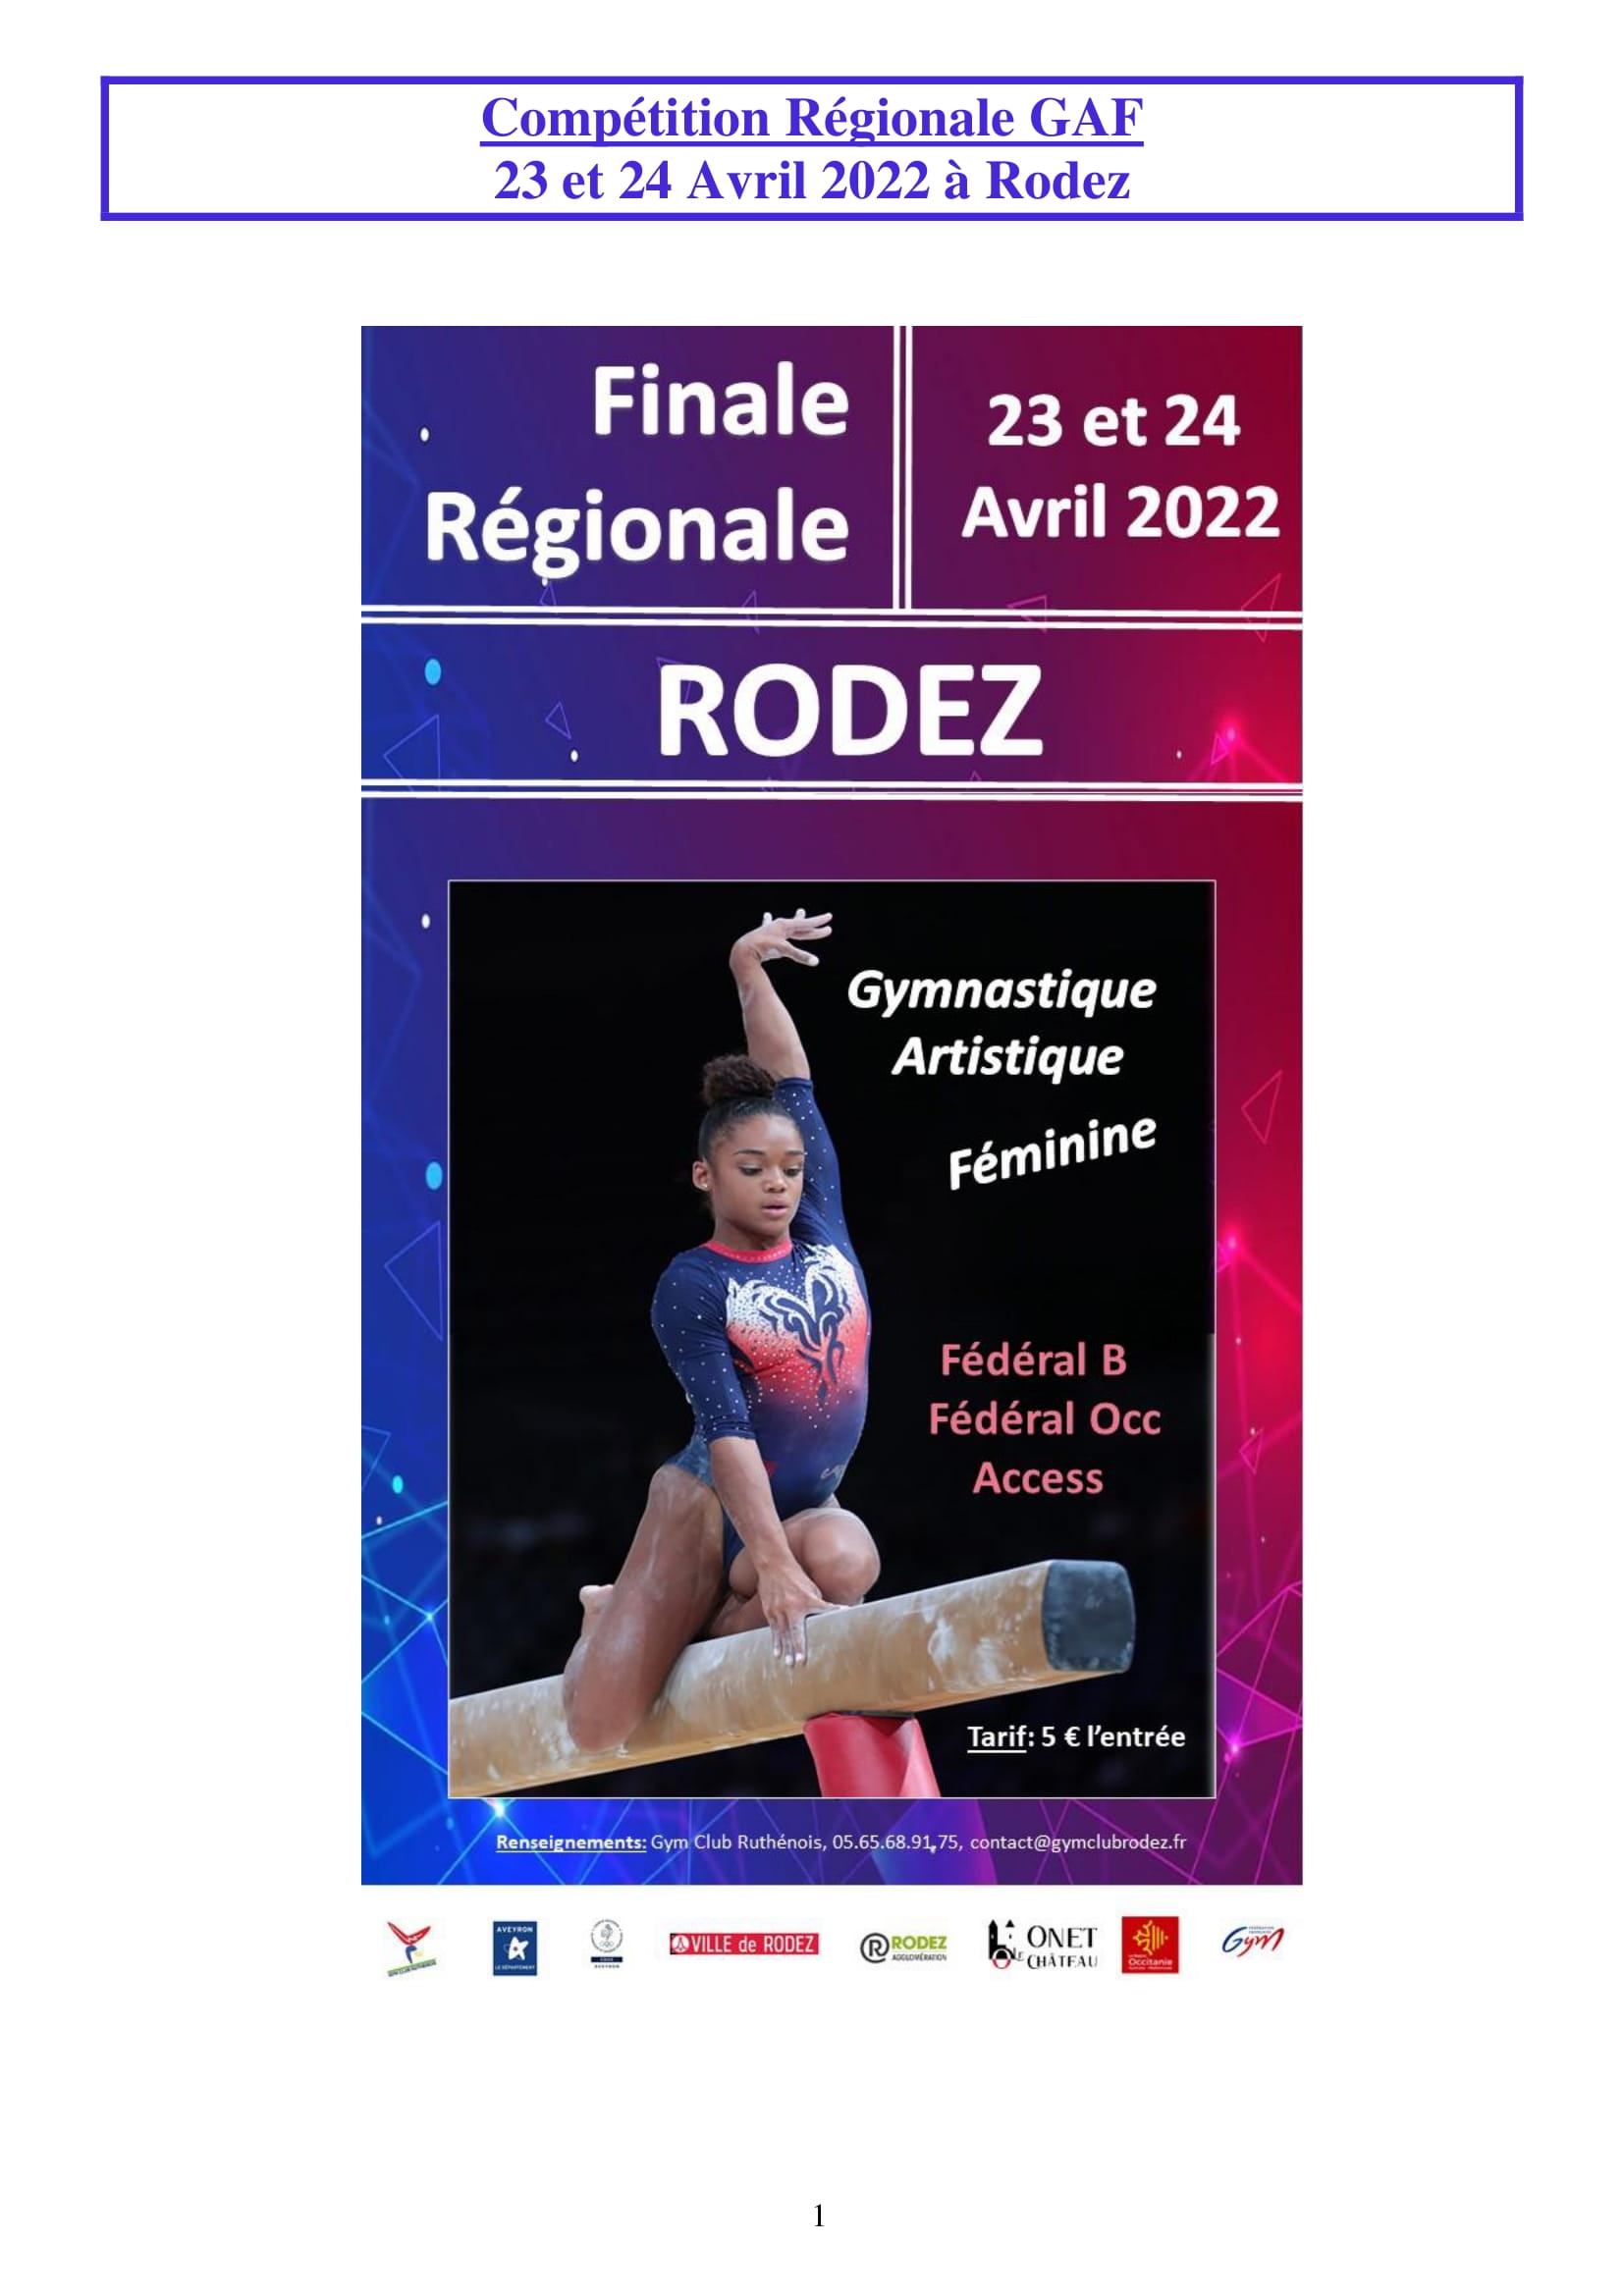 GAF - Rodez - 23 et 24 avril - Finale régionale - Fed B et Fed Oc